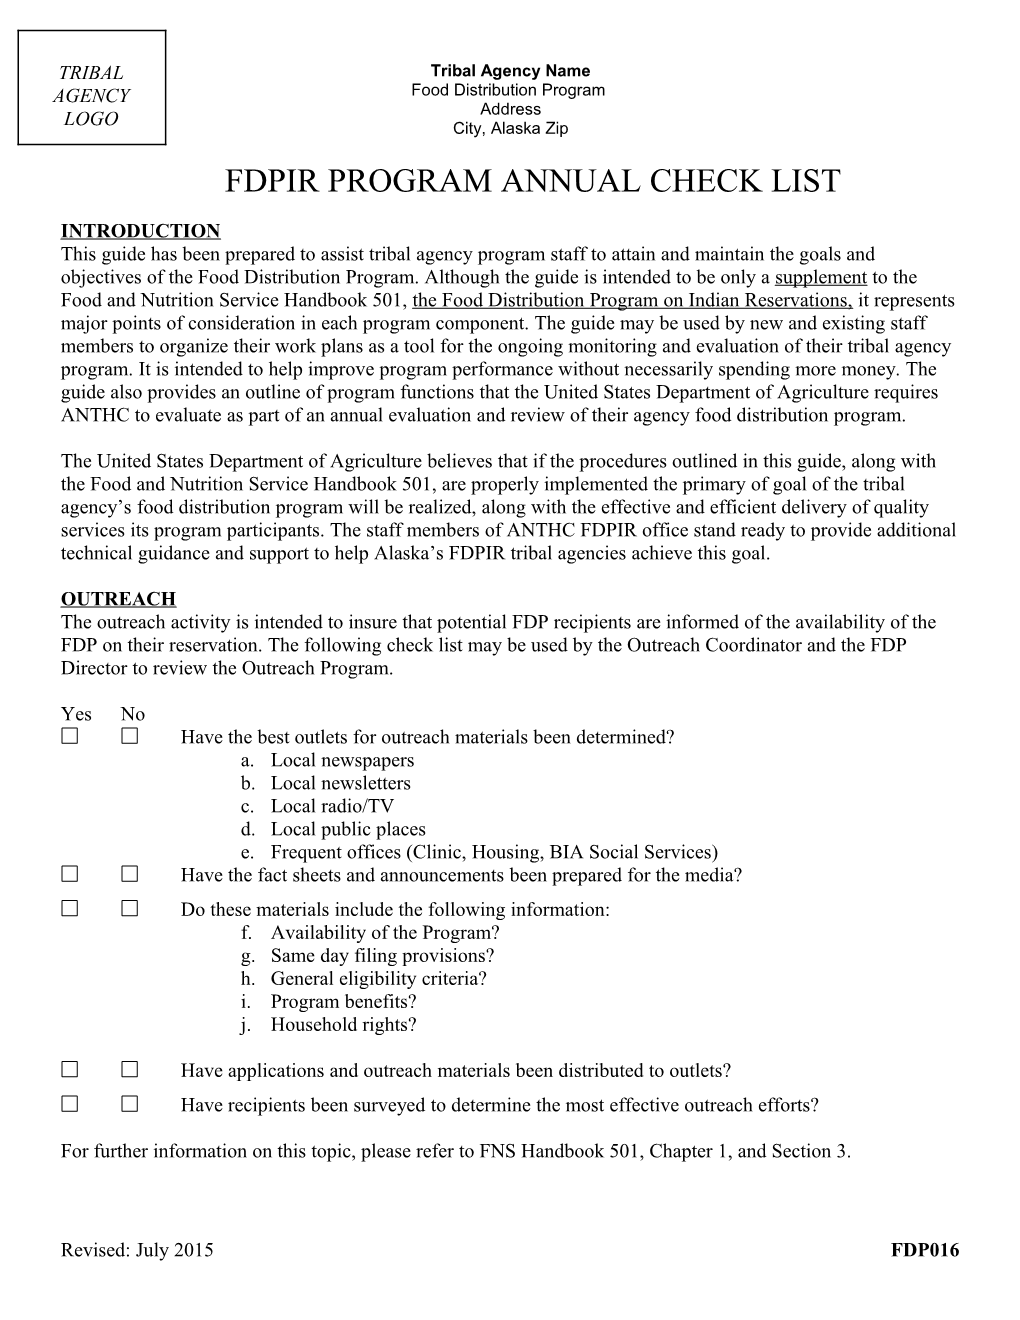 Alaska FDPIR Program Check List